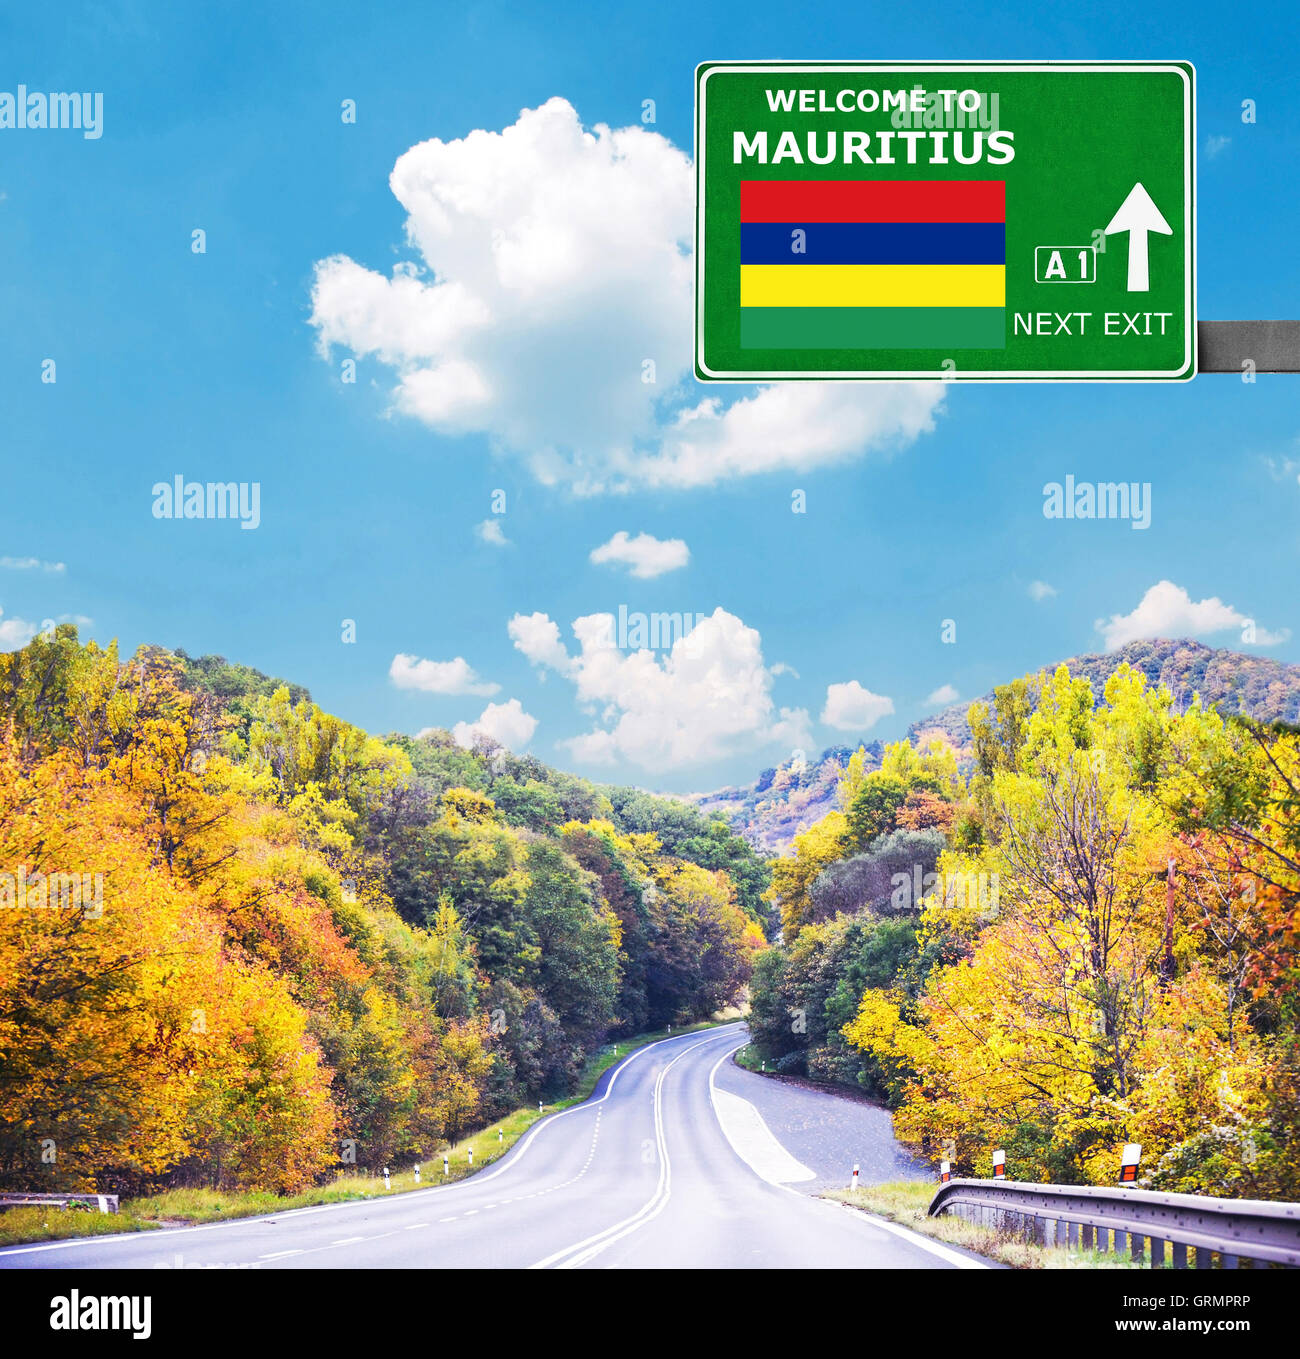 Mauritius-Schild gegen klar blauen Himmel Stockfoto